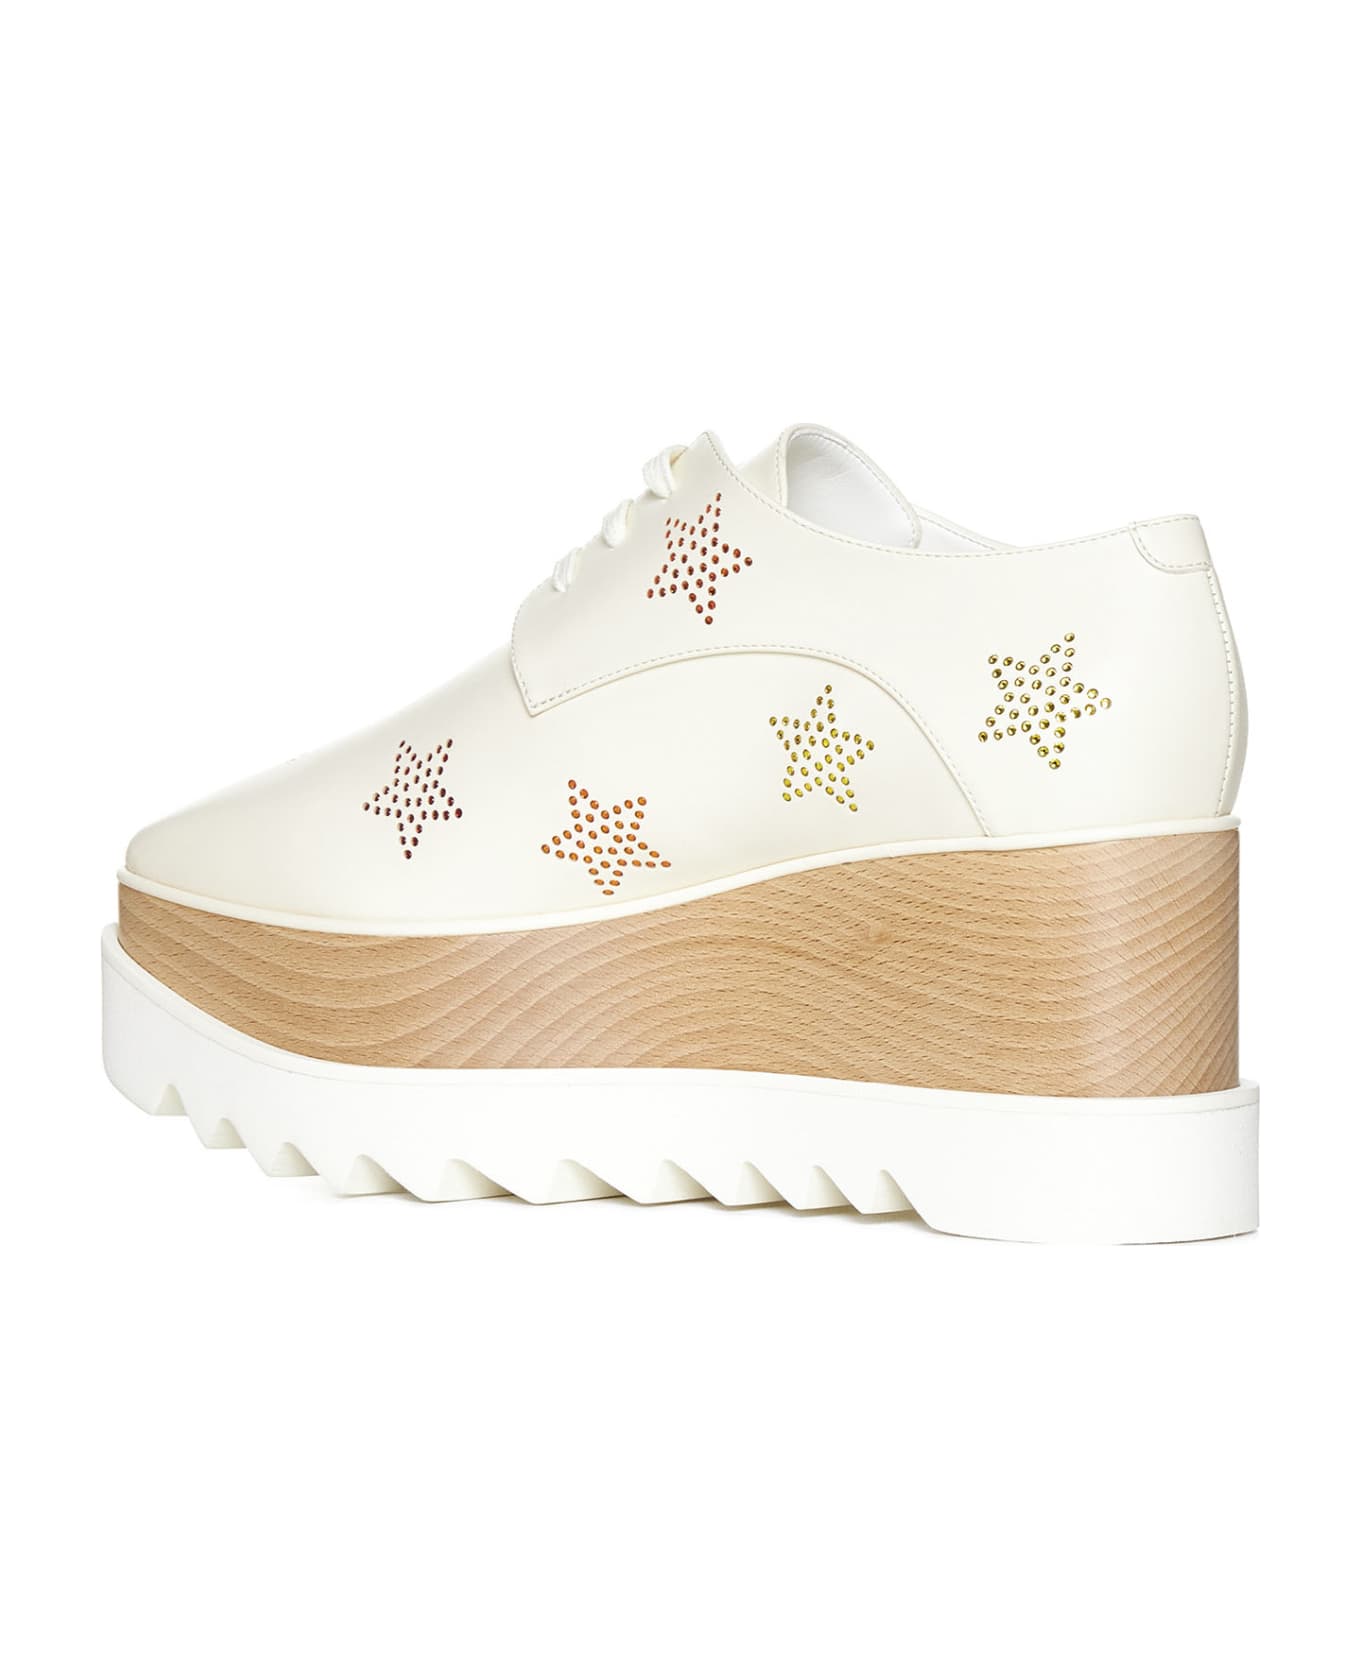 Stella McCartney Elyse Eco Sneakers - Cream multicolor